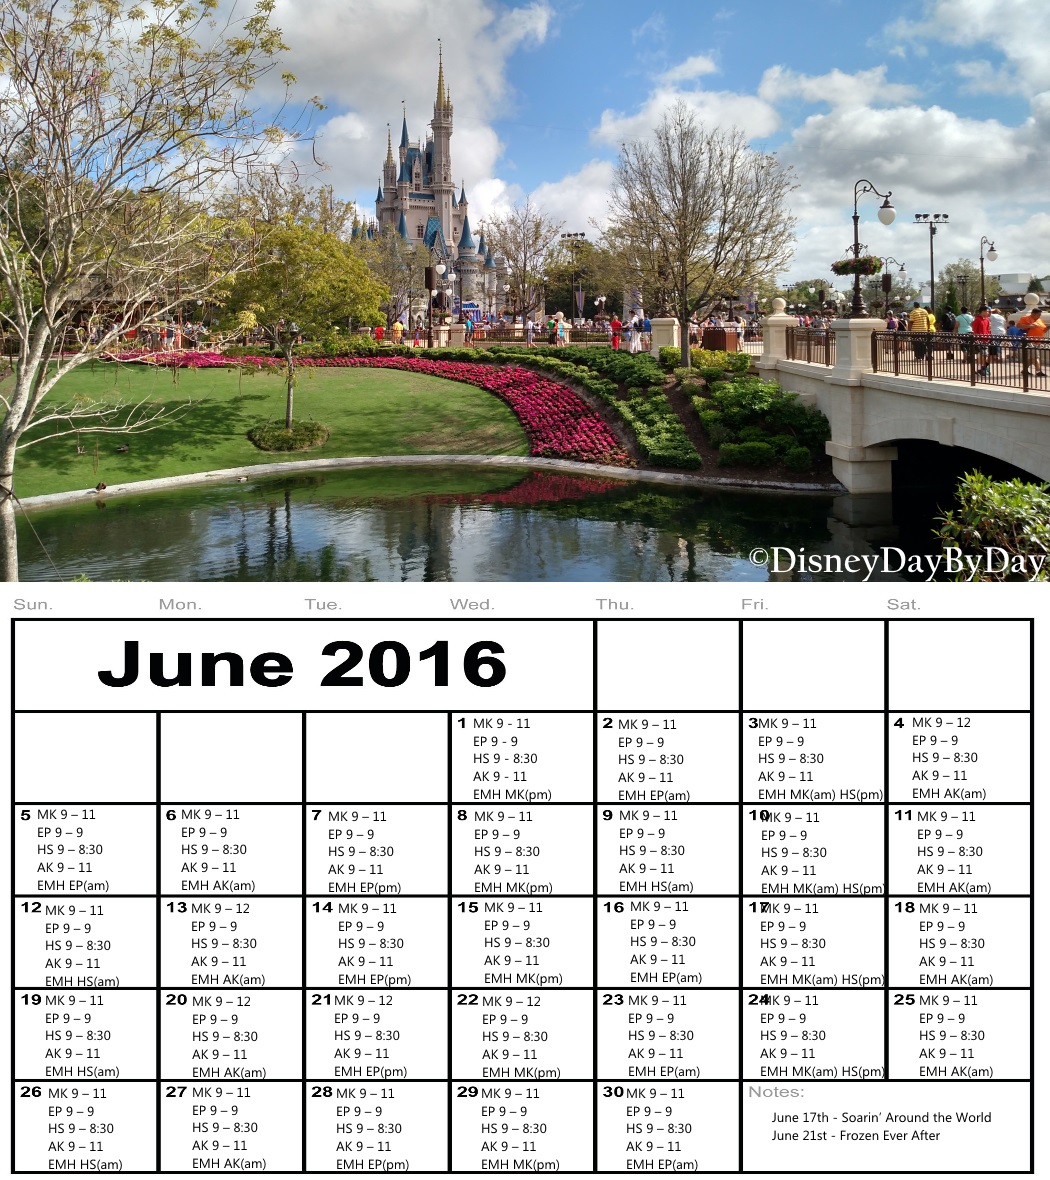 Walt Disney World - June 2016 Calendar - DisneyDayByDay